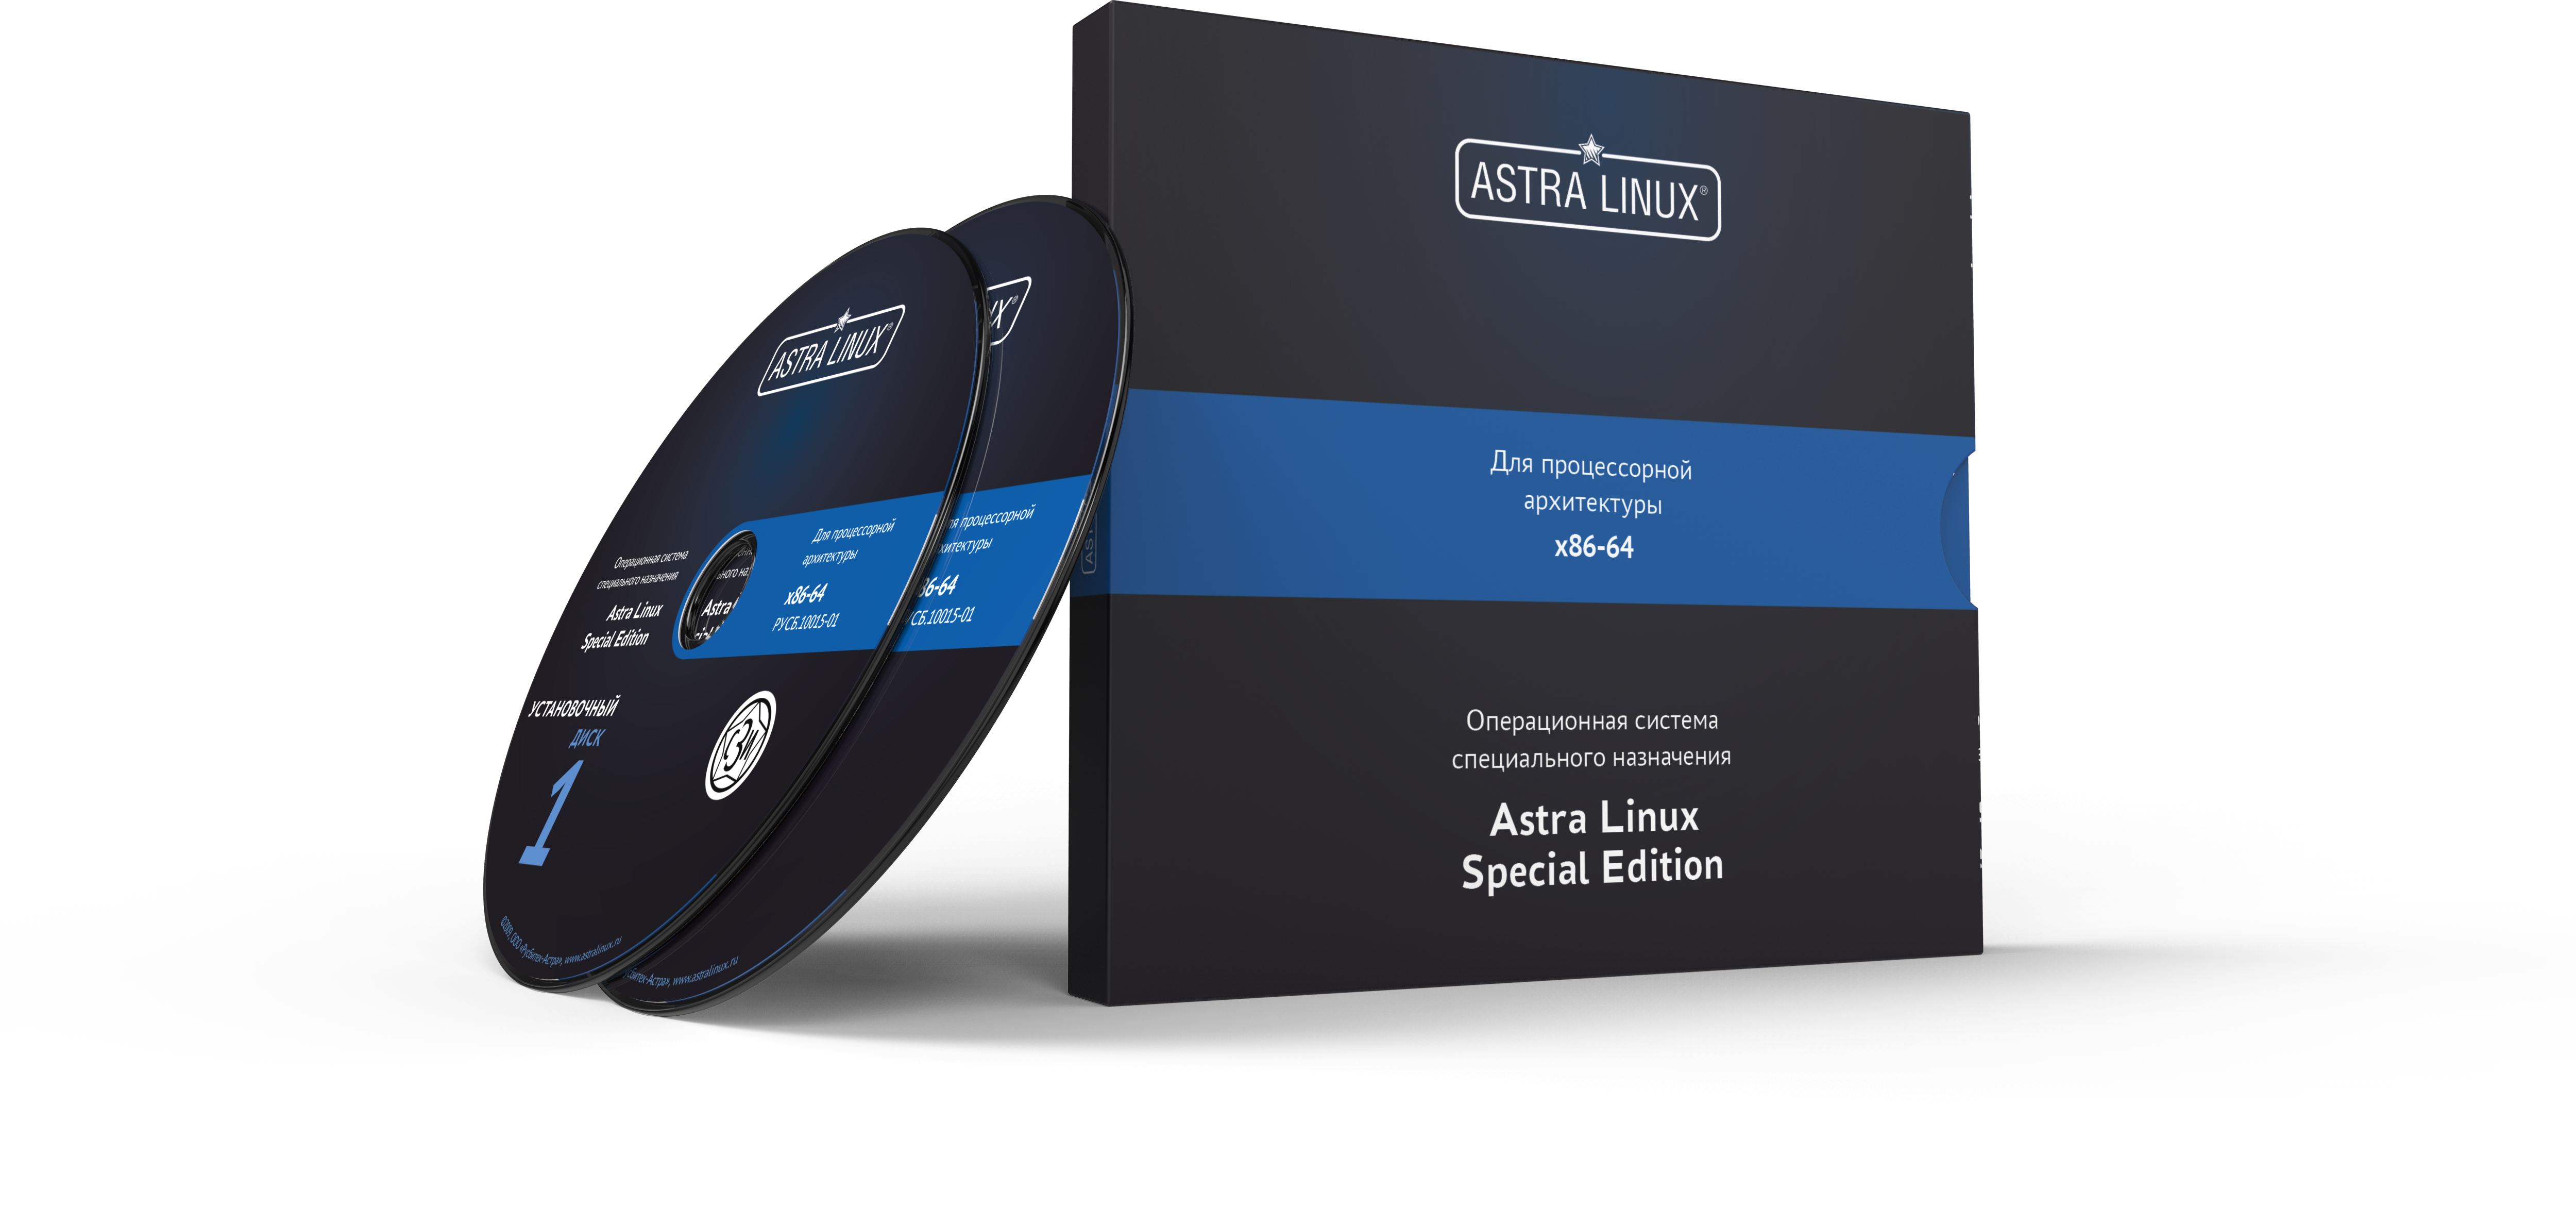 Astra Linux Special Edition 1.7 - Воронеж, "Усиленный", диск, ФСТЭК, без огр. срока, ТП "Стандарт" на 24 мес.